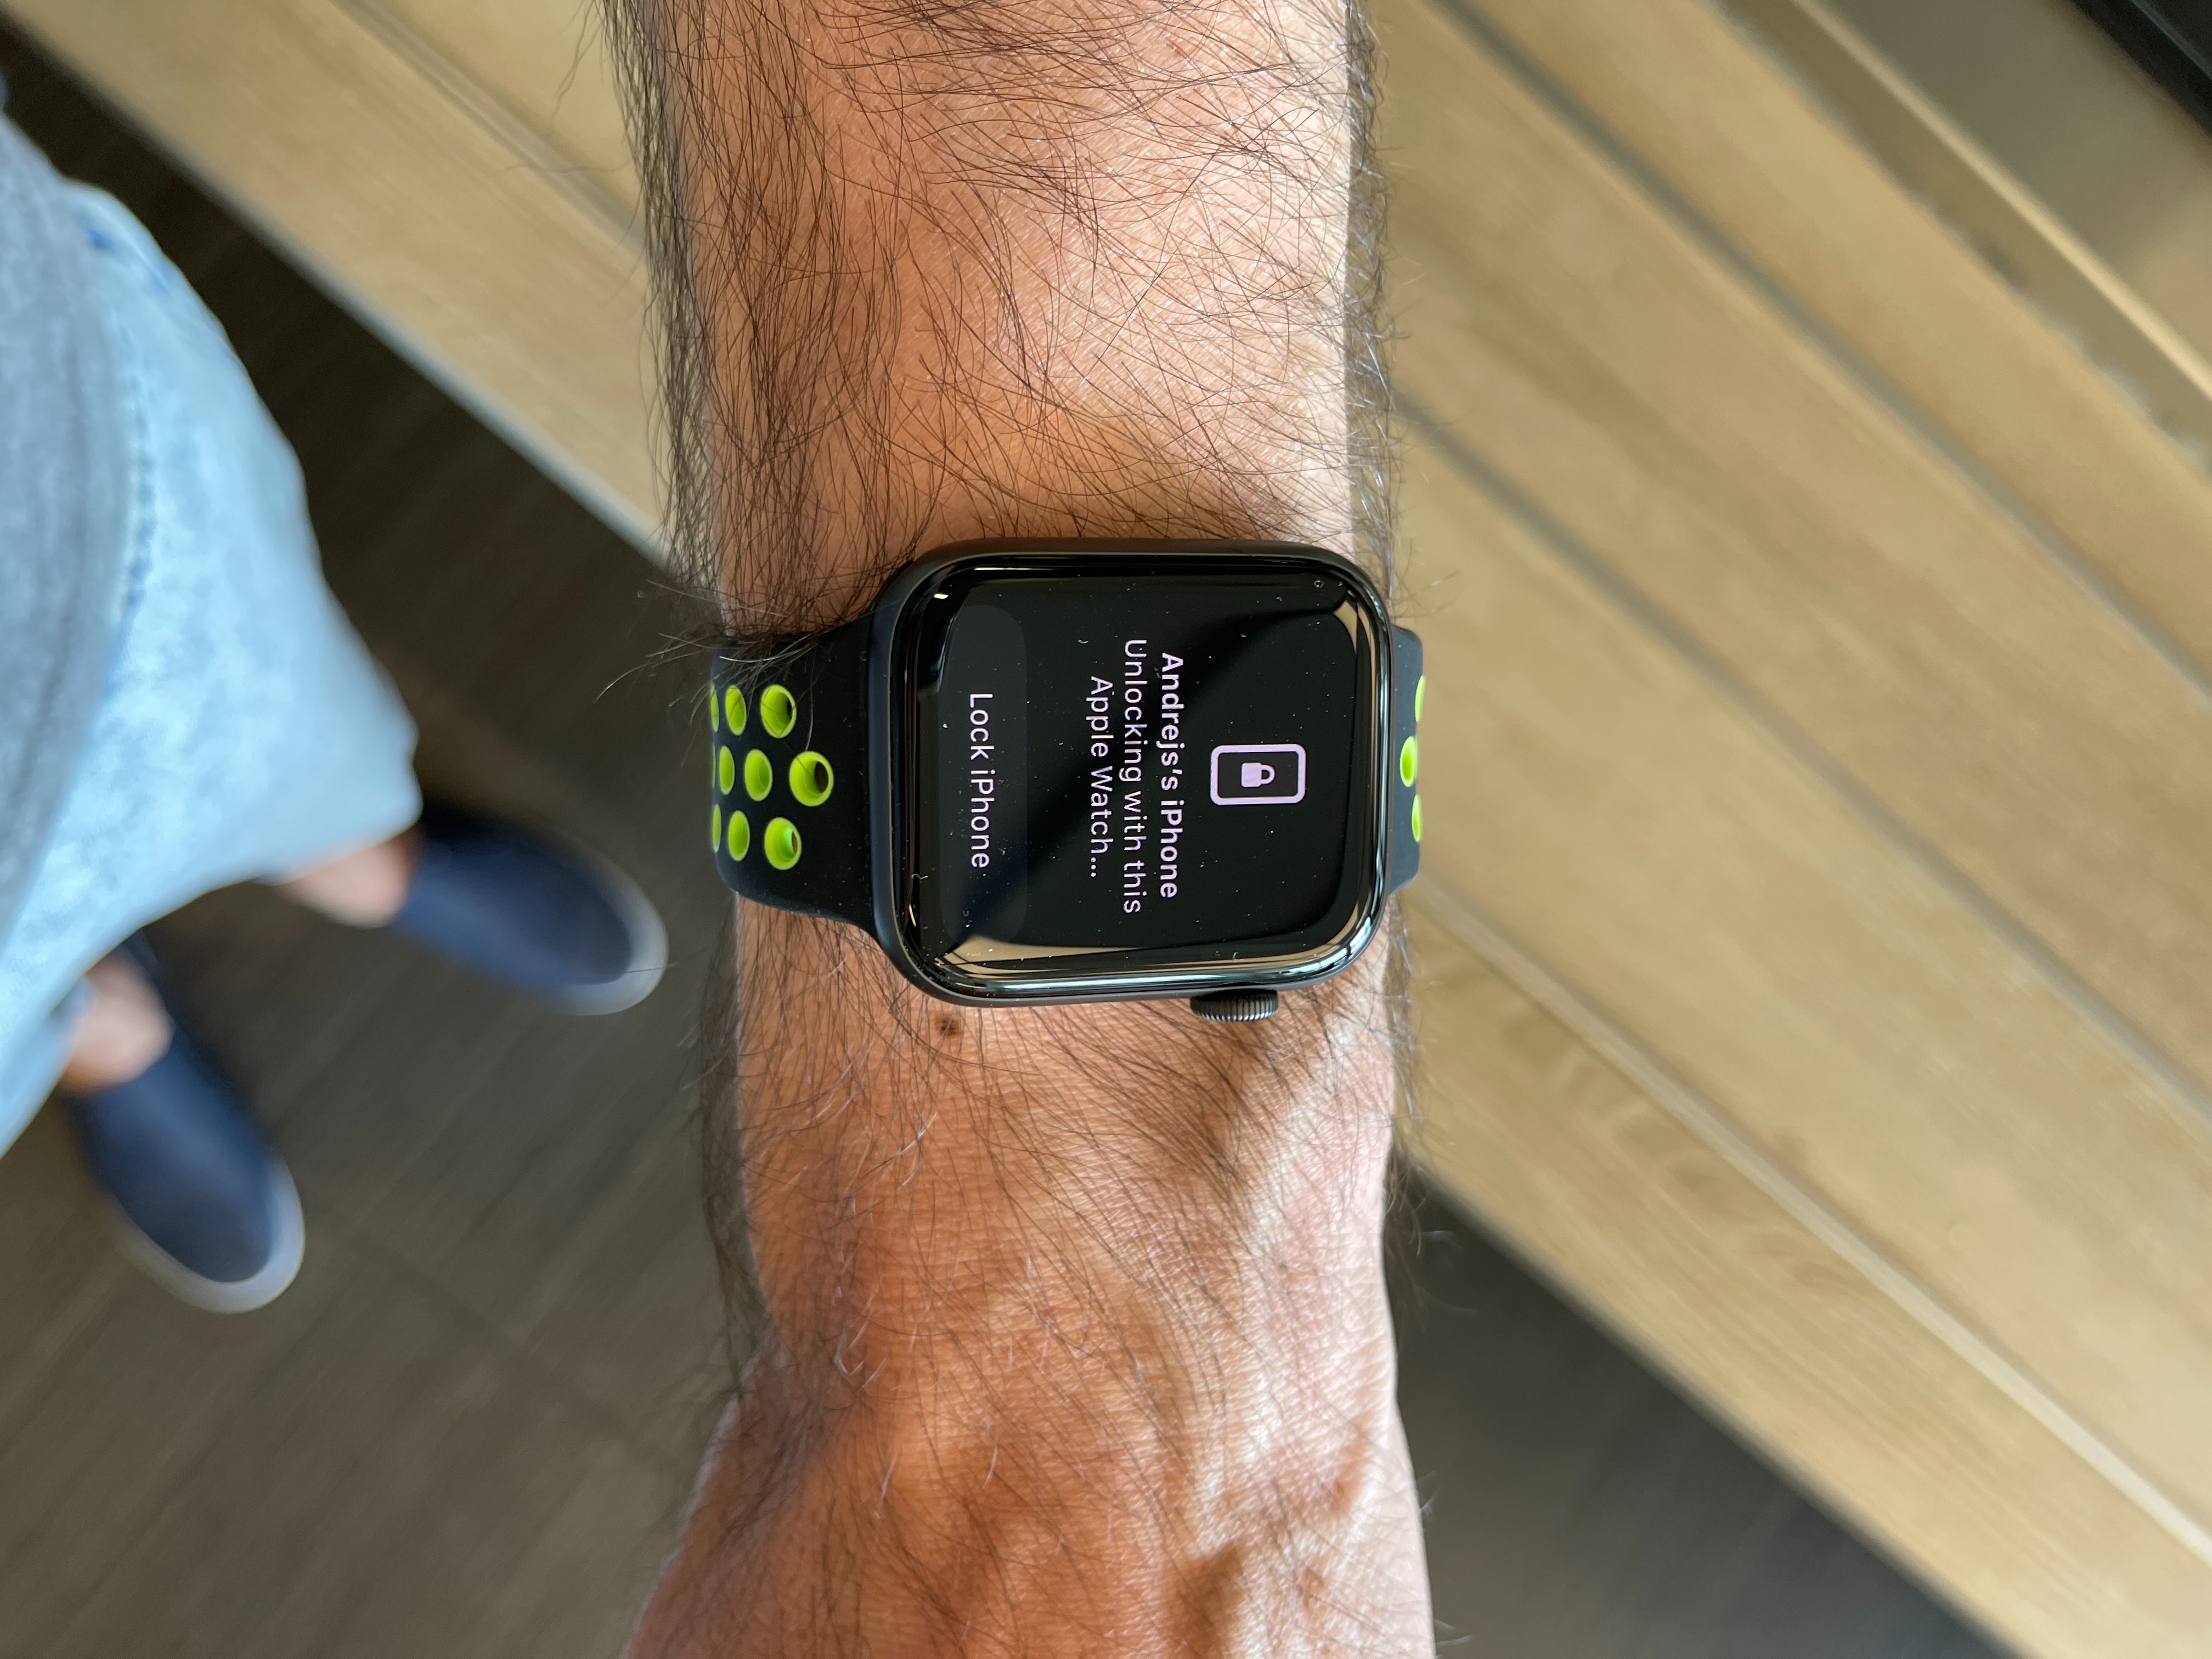 Unlock iphone with apple watch